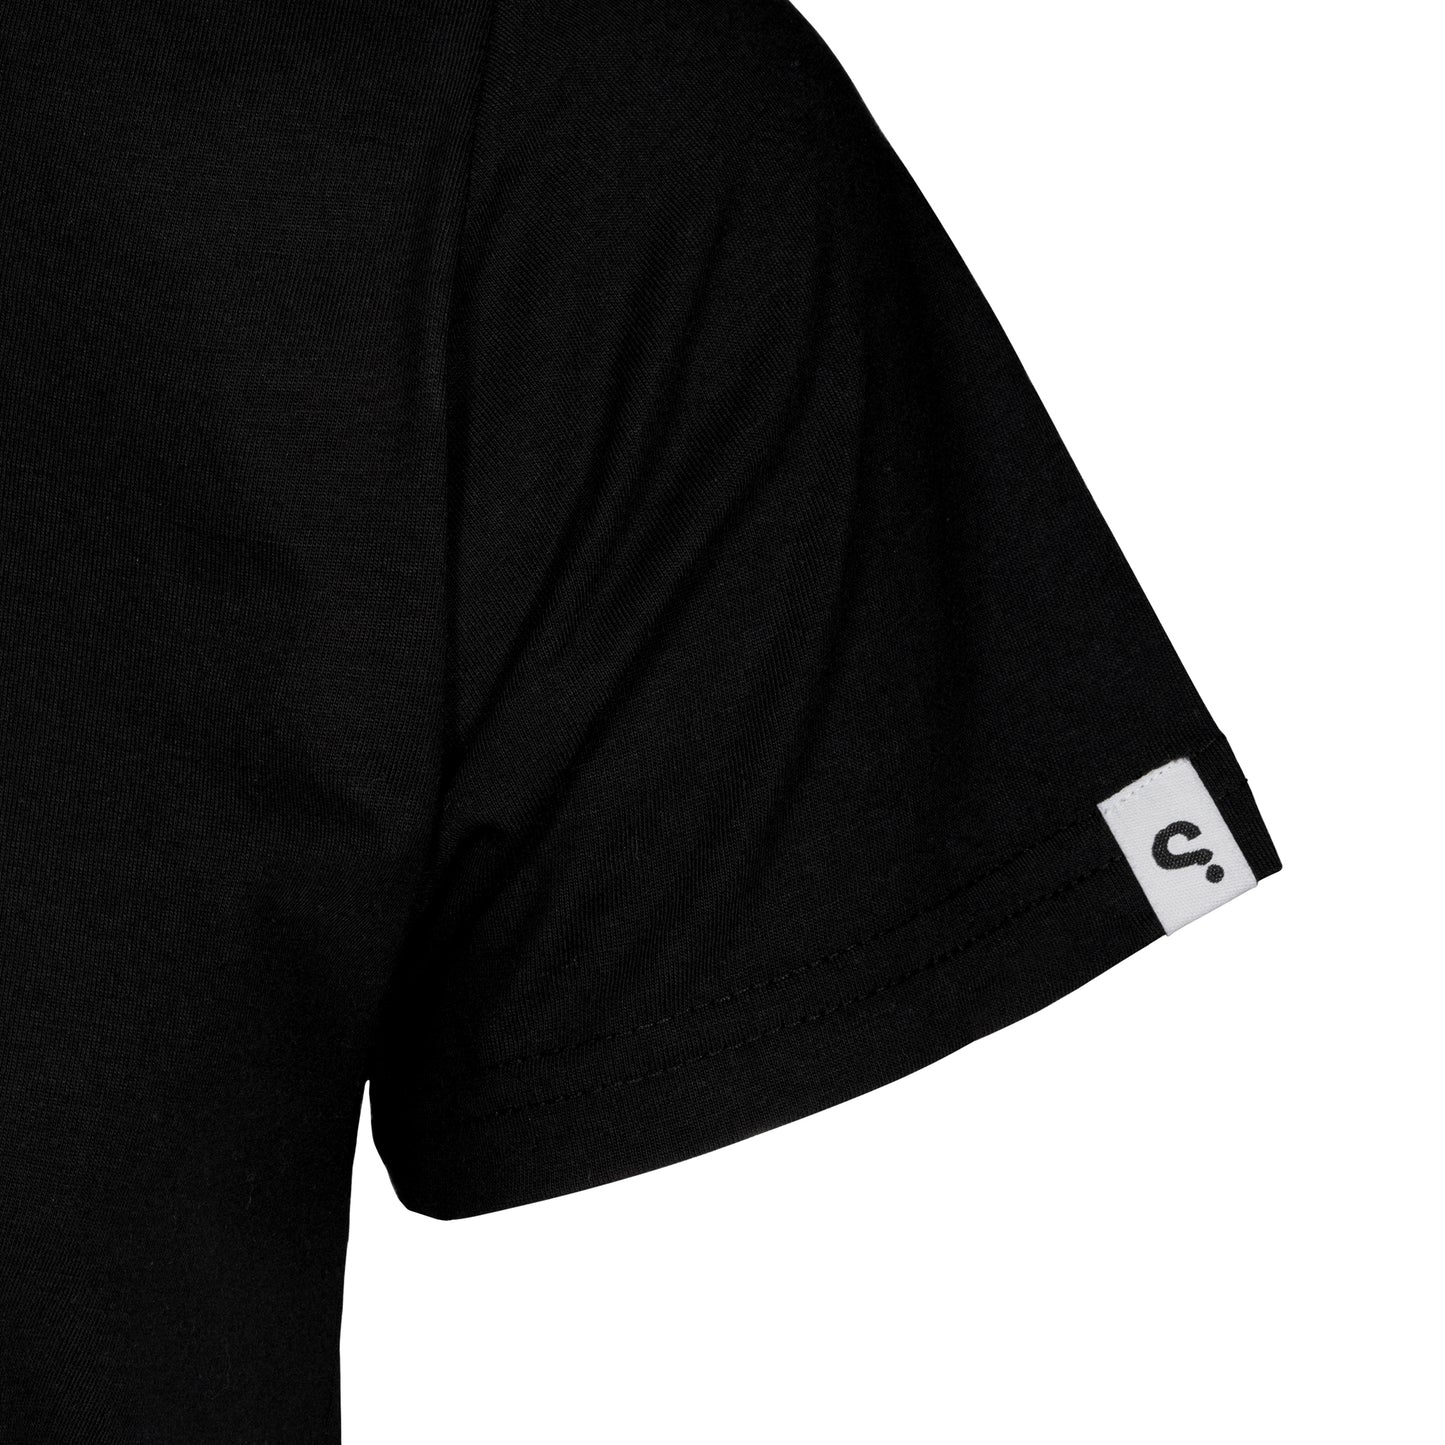 SPYSCAPE Spycatcher T-Shirt with Hidden Zip Pocket - Sleeve tag